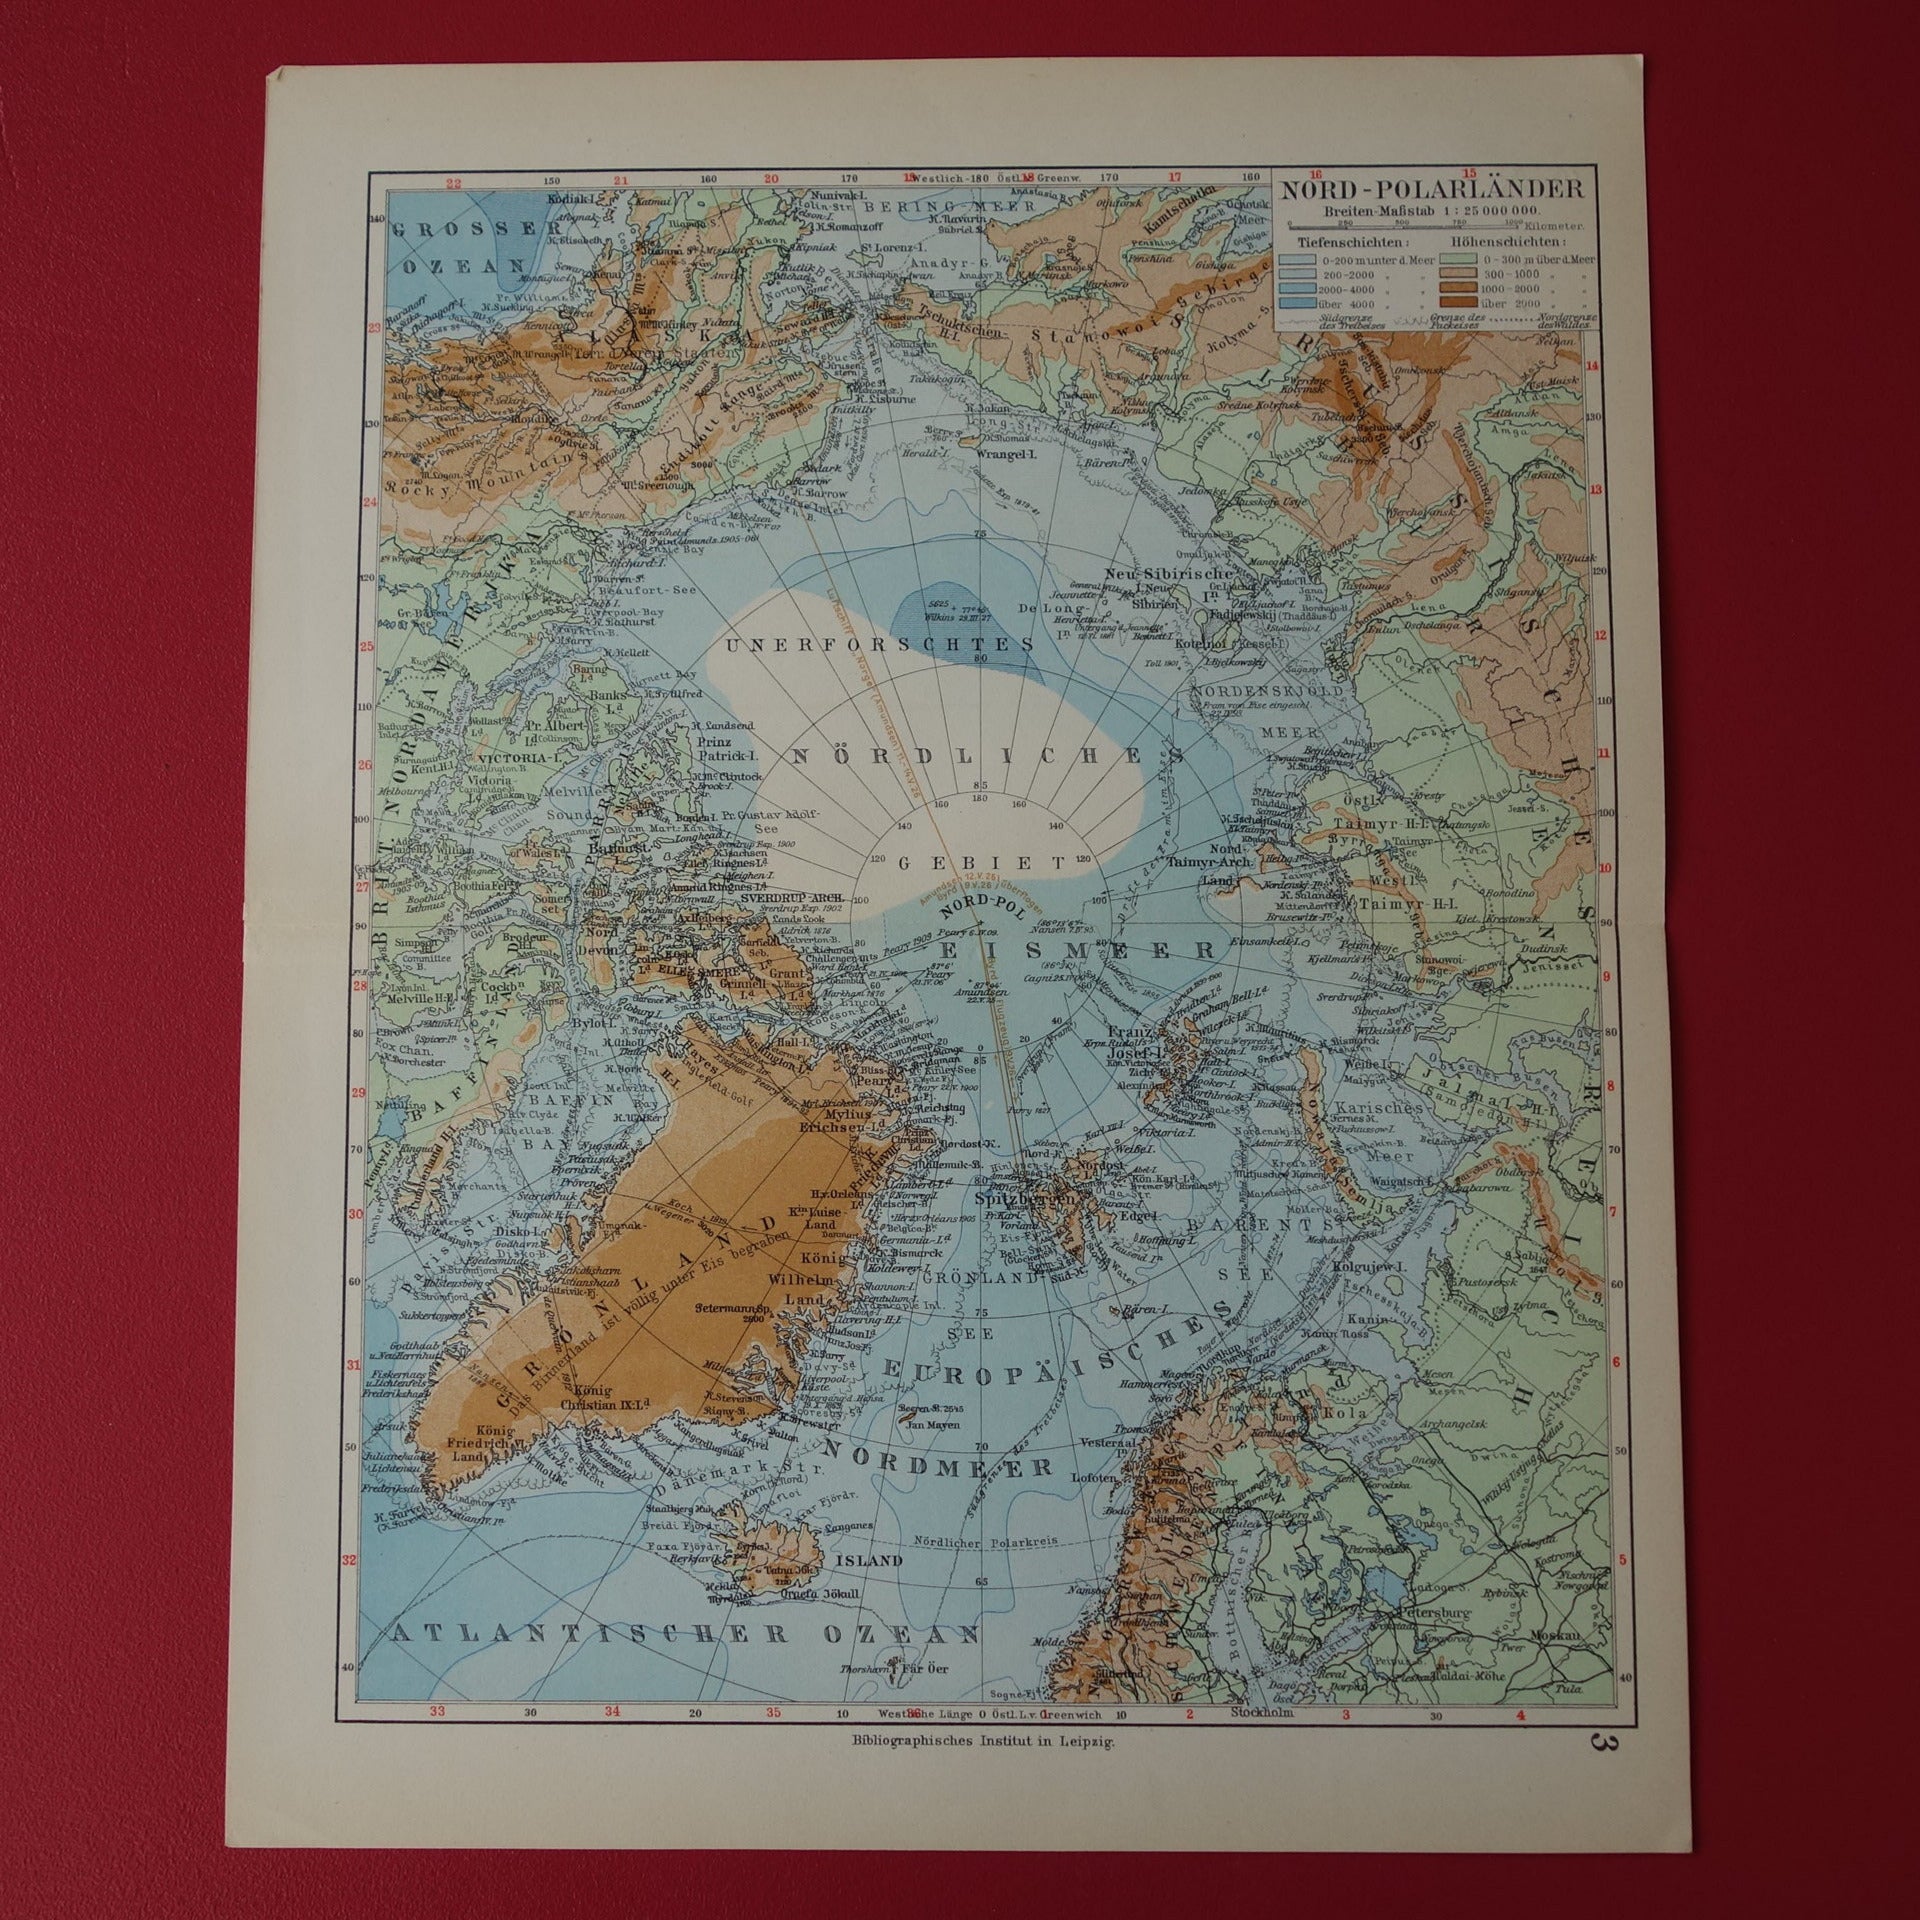 kaart van de noordpool uit 1928 originele vintage landkaart met poolexpedities routes